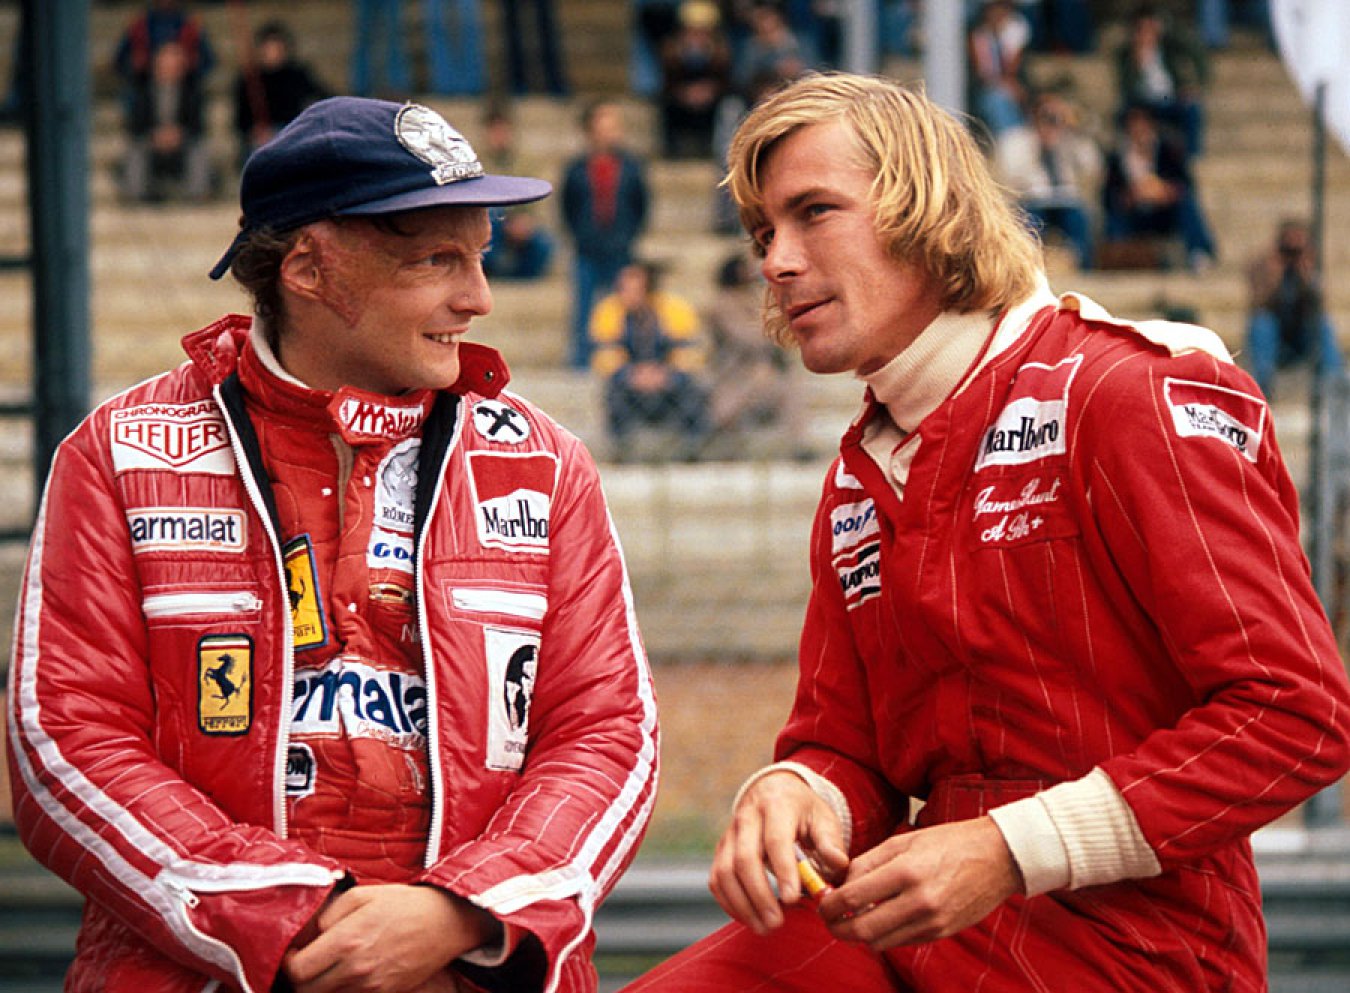 Lauda vs Hunt 1976